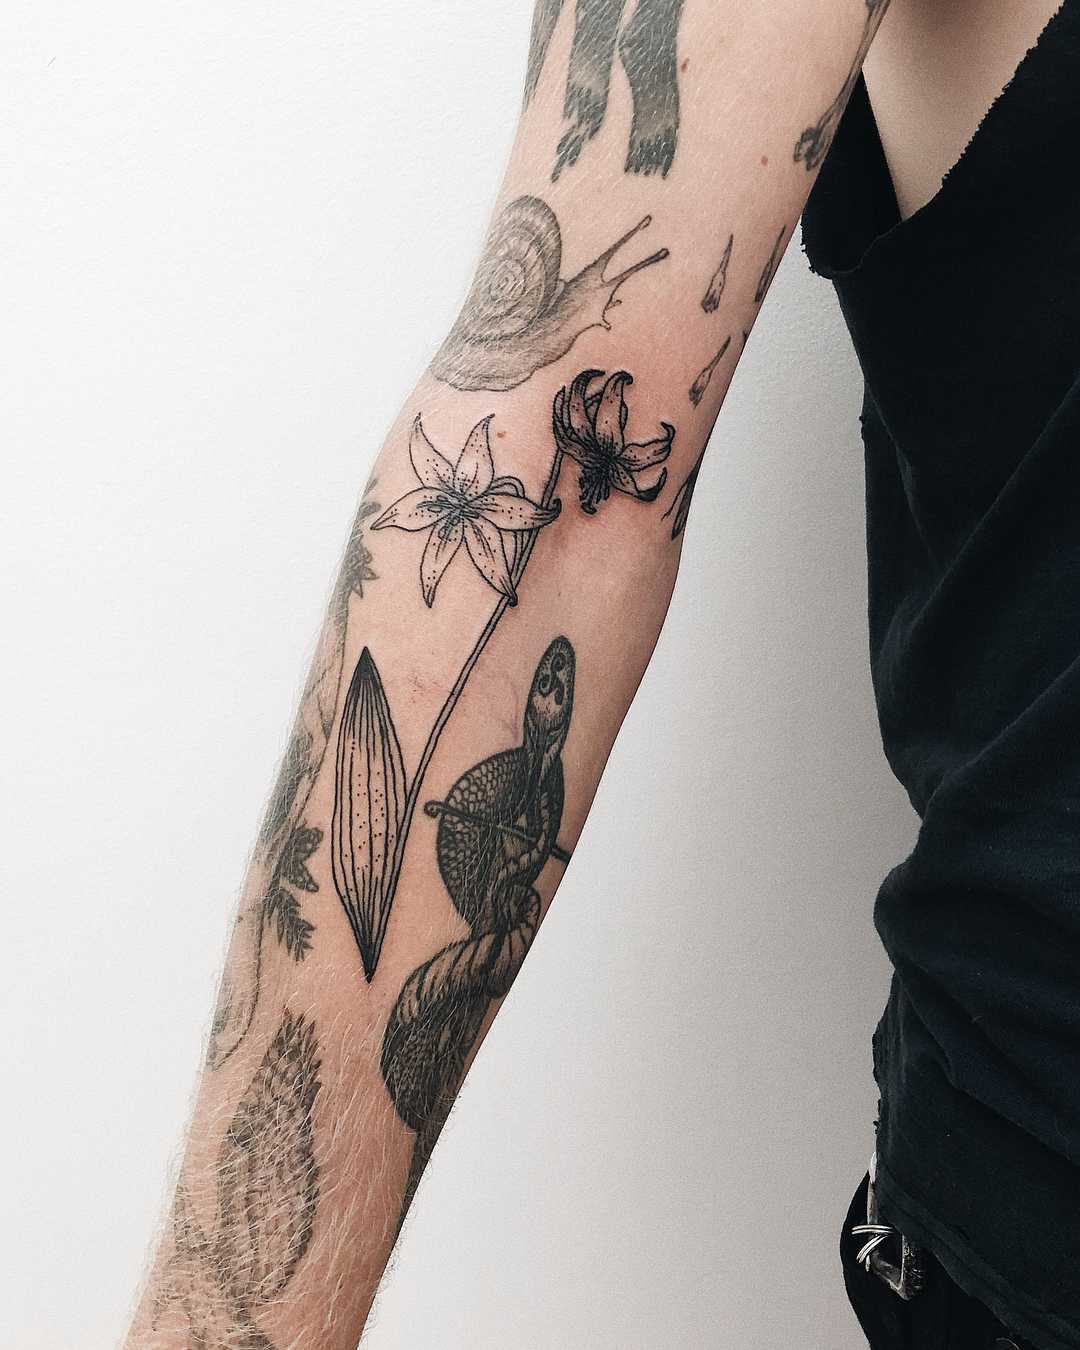 Little Alpine lily filler tattoo